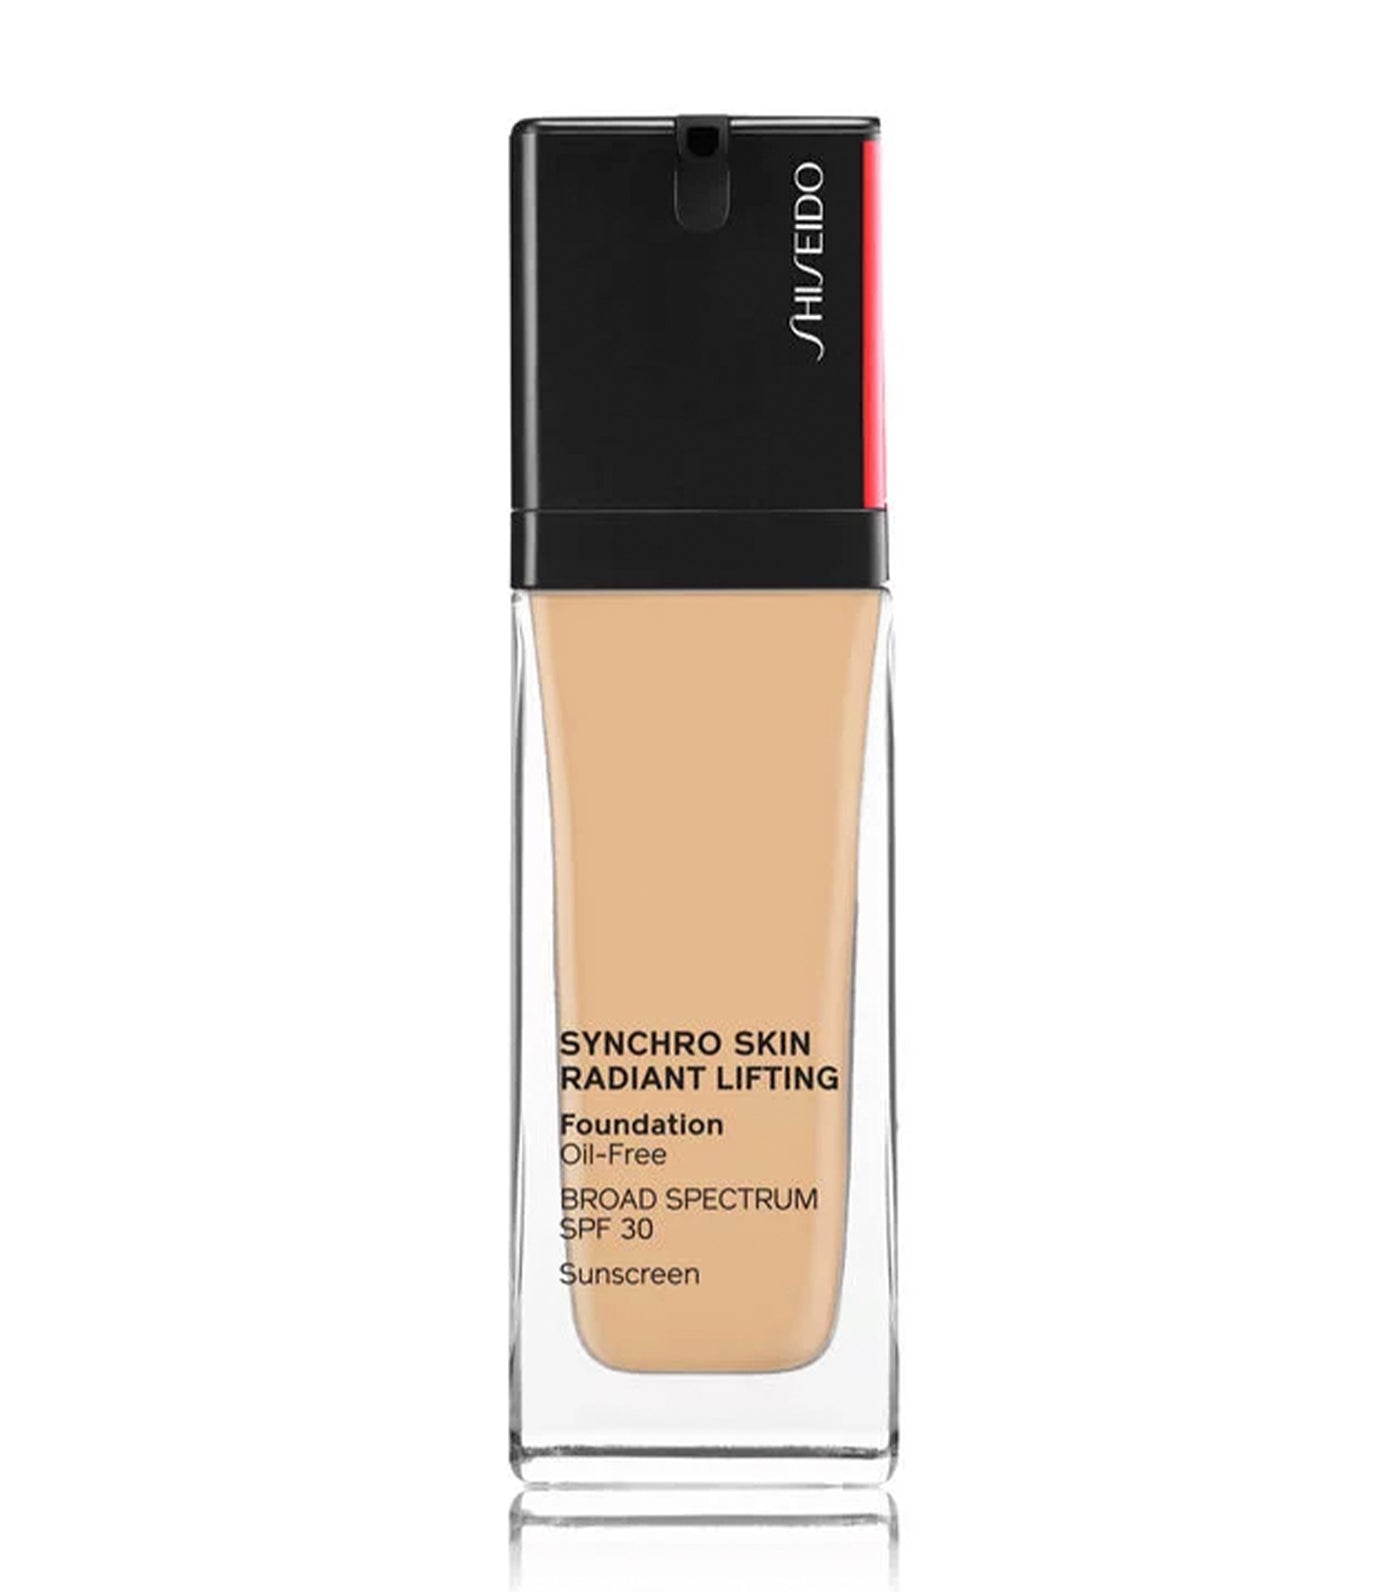  Shiseido Synchro Skin Radiant Lifting Foundation 230